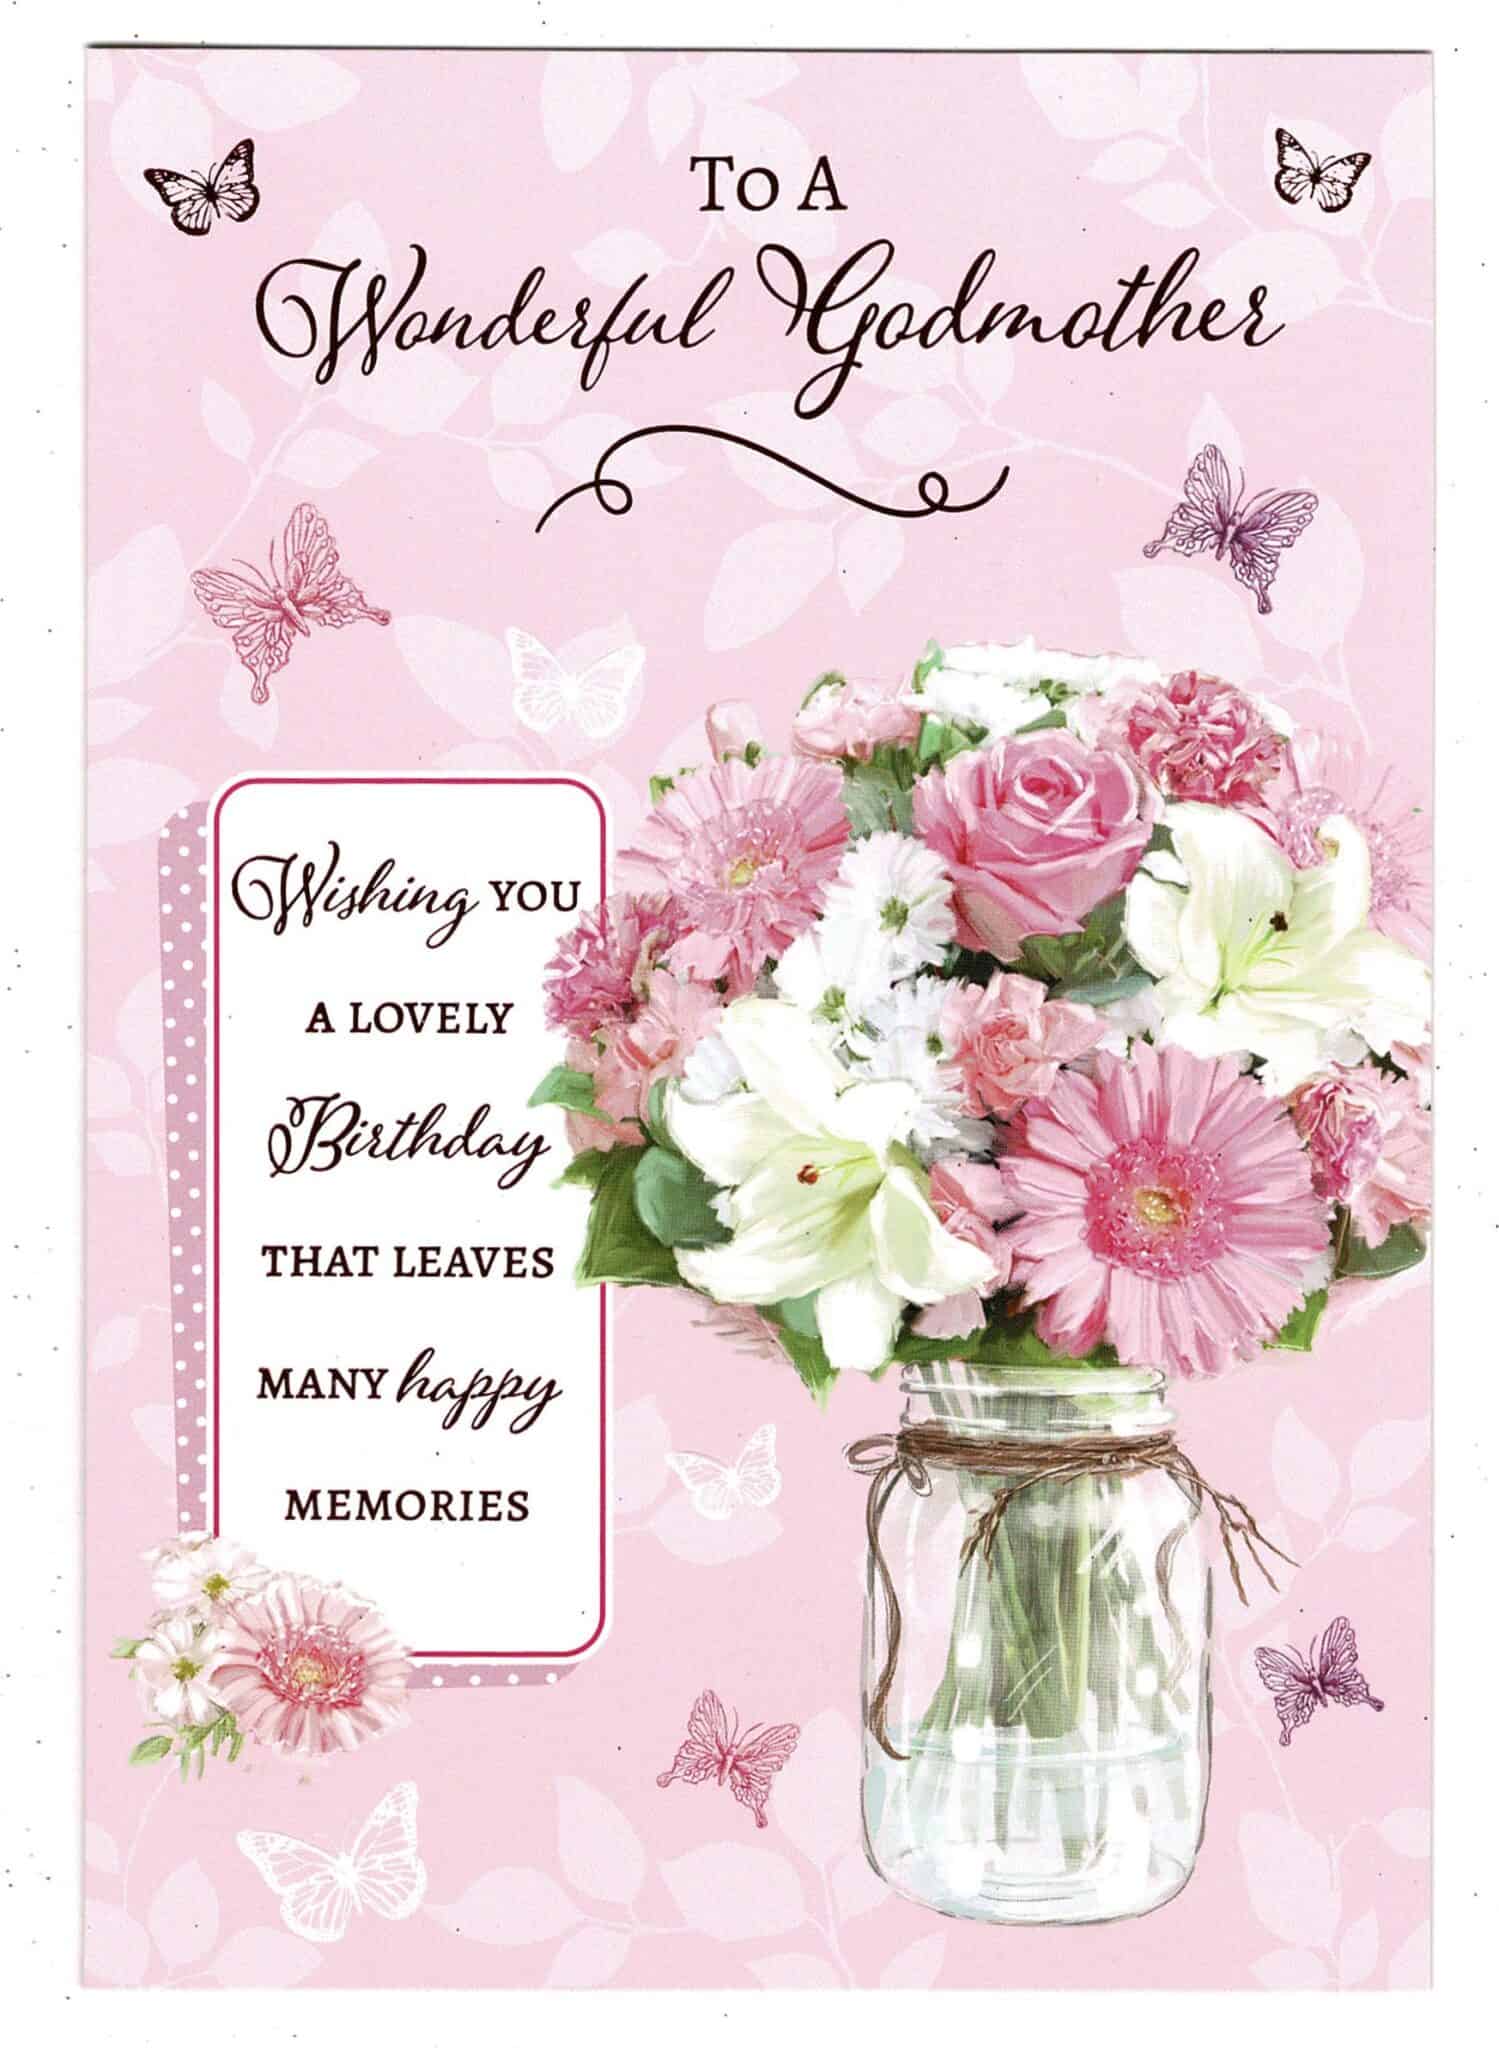 godmother-birthday-card-to-a-wonderful-godmother-on-your-birthday